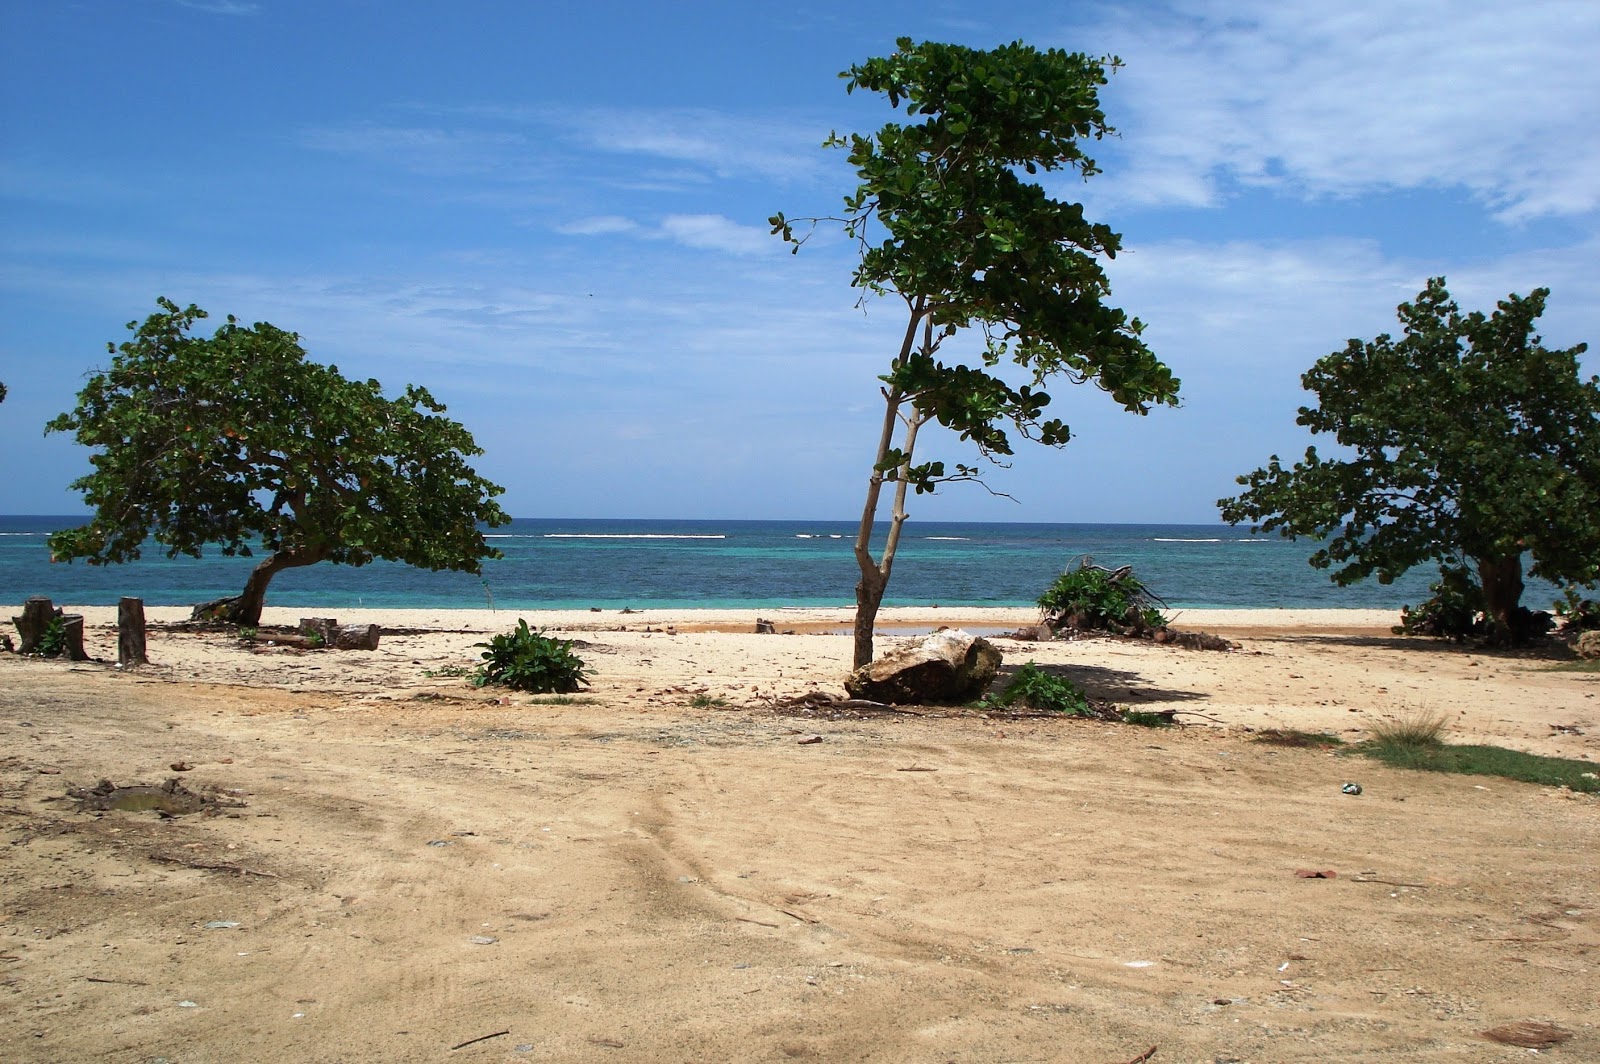 Fotografie cu Playa Maguana cu nivelul de curățenie in medie